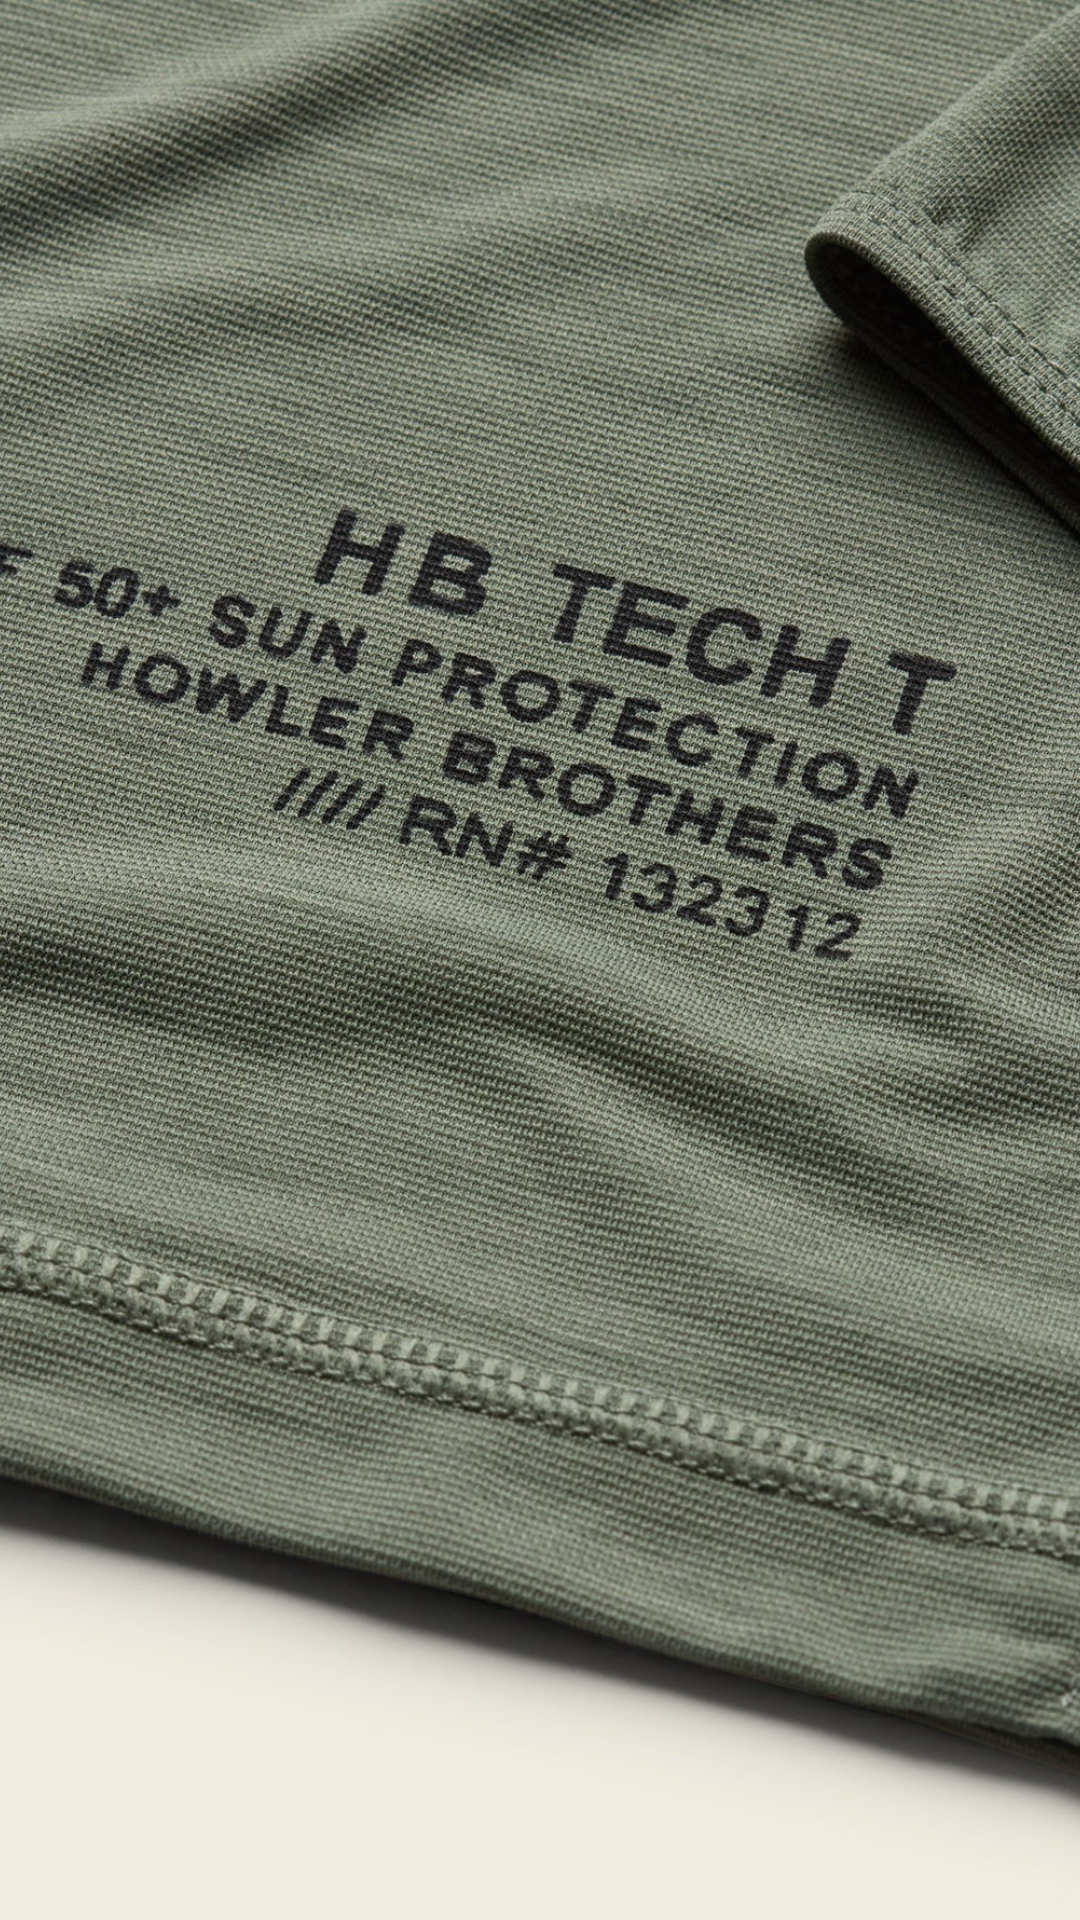 HB Tech Hoodie